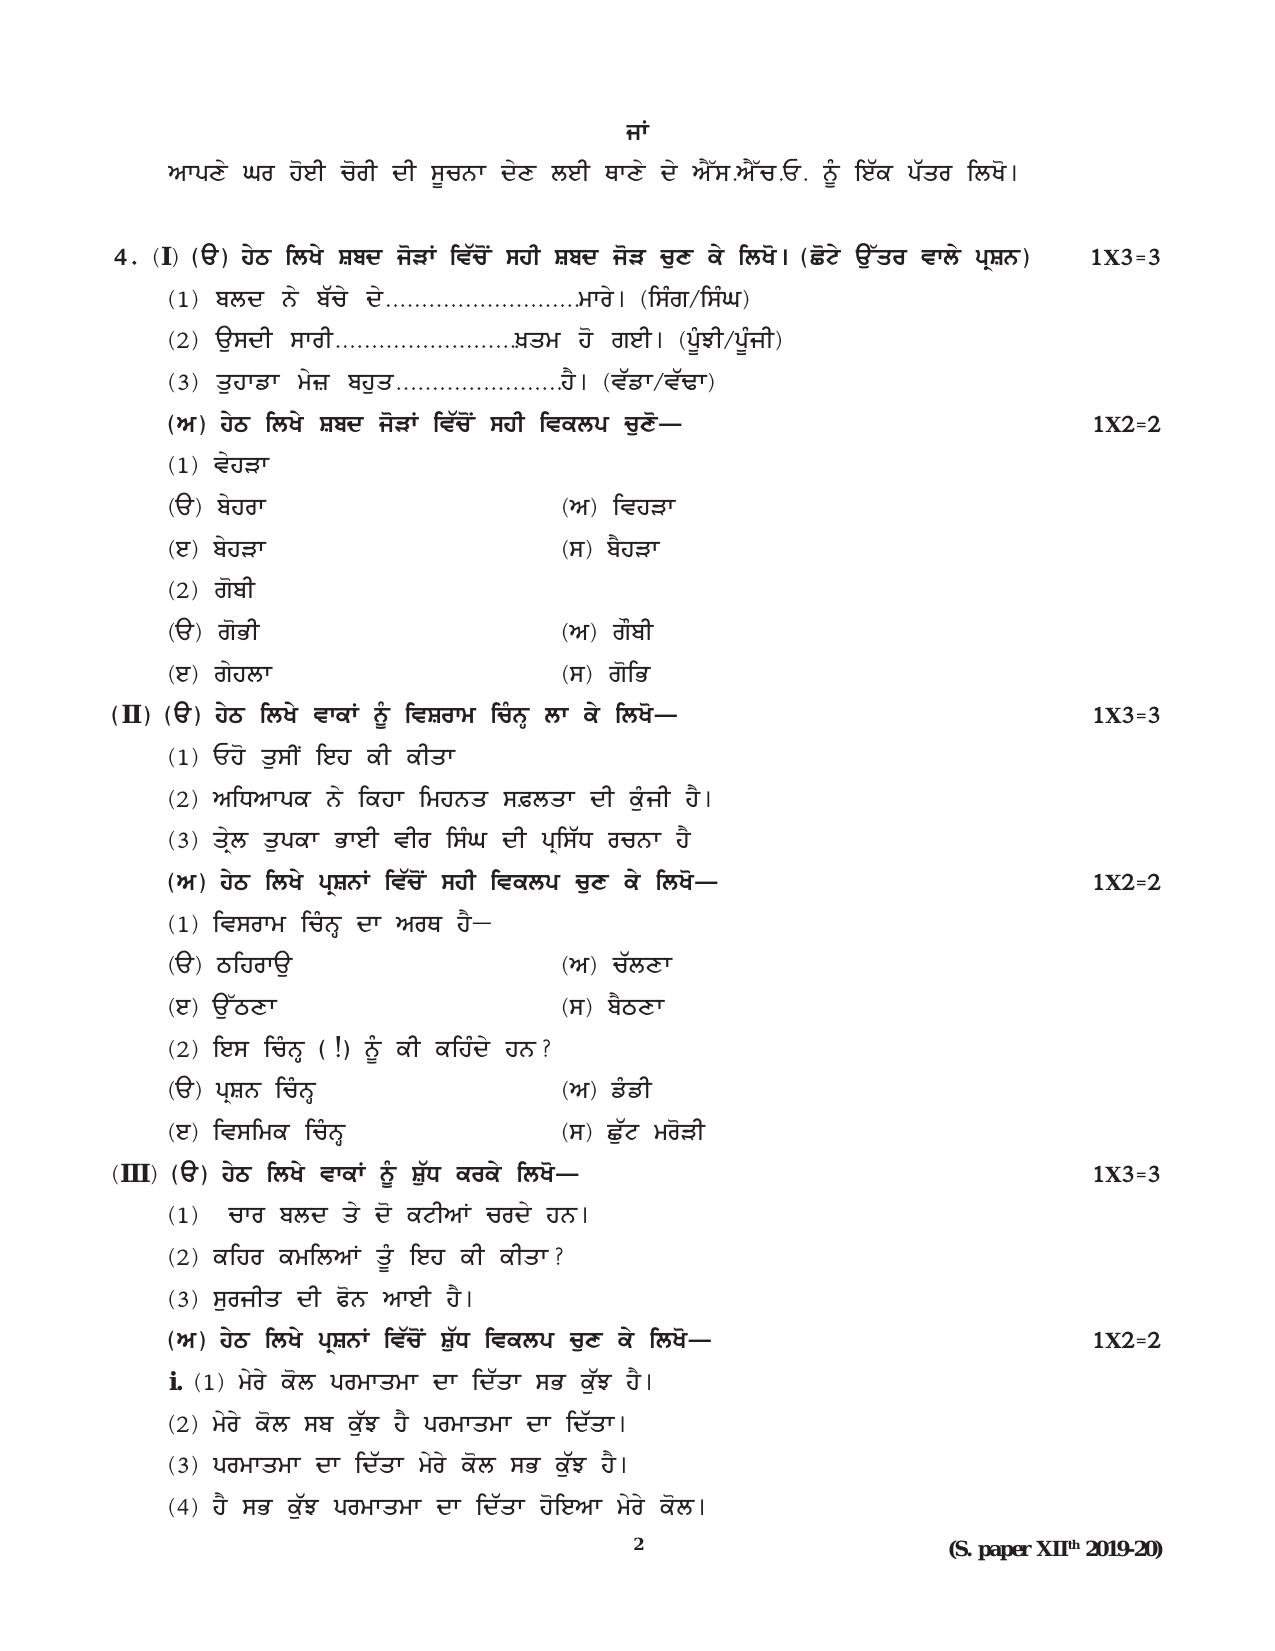 CBSE Class 12 Punjabi -Sample Paper 2019-20 - Page 2